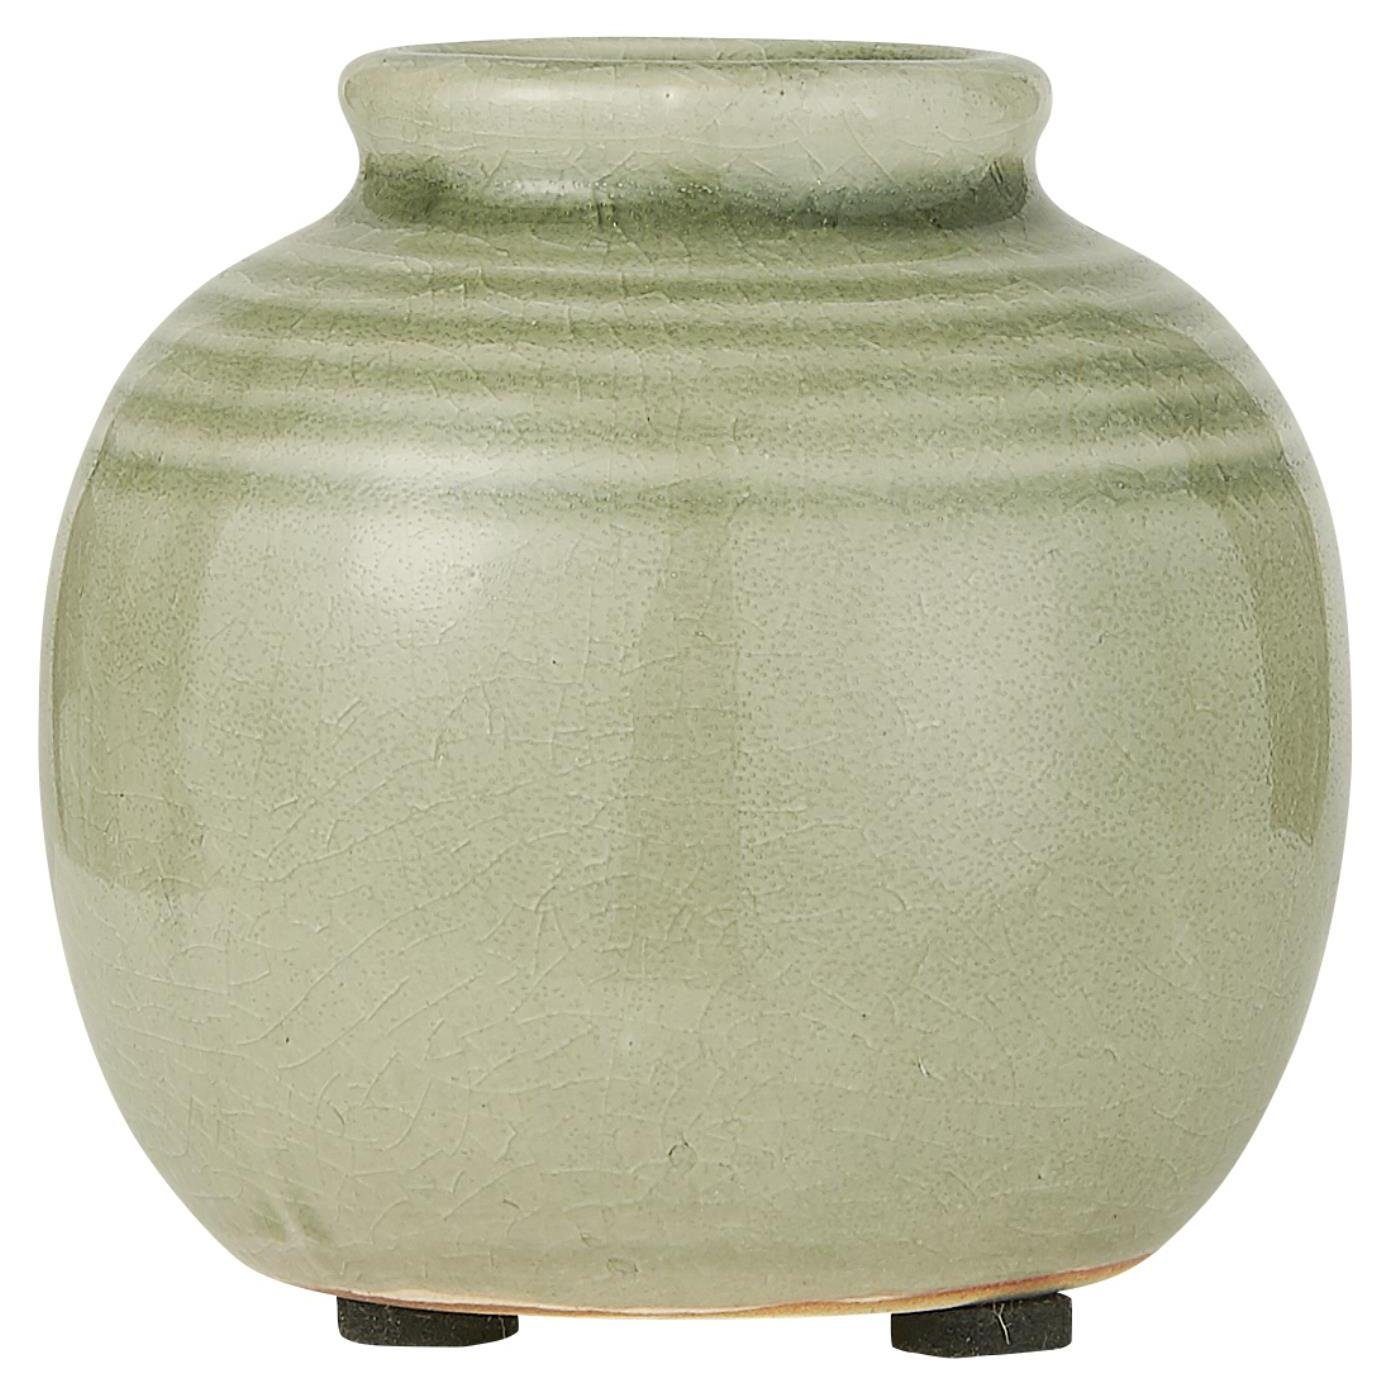 Ib Laursen Dekovase Ib Laursen Vase mini Yrsa mit Rillen staubig grün graugrün